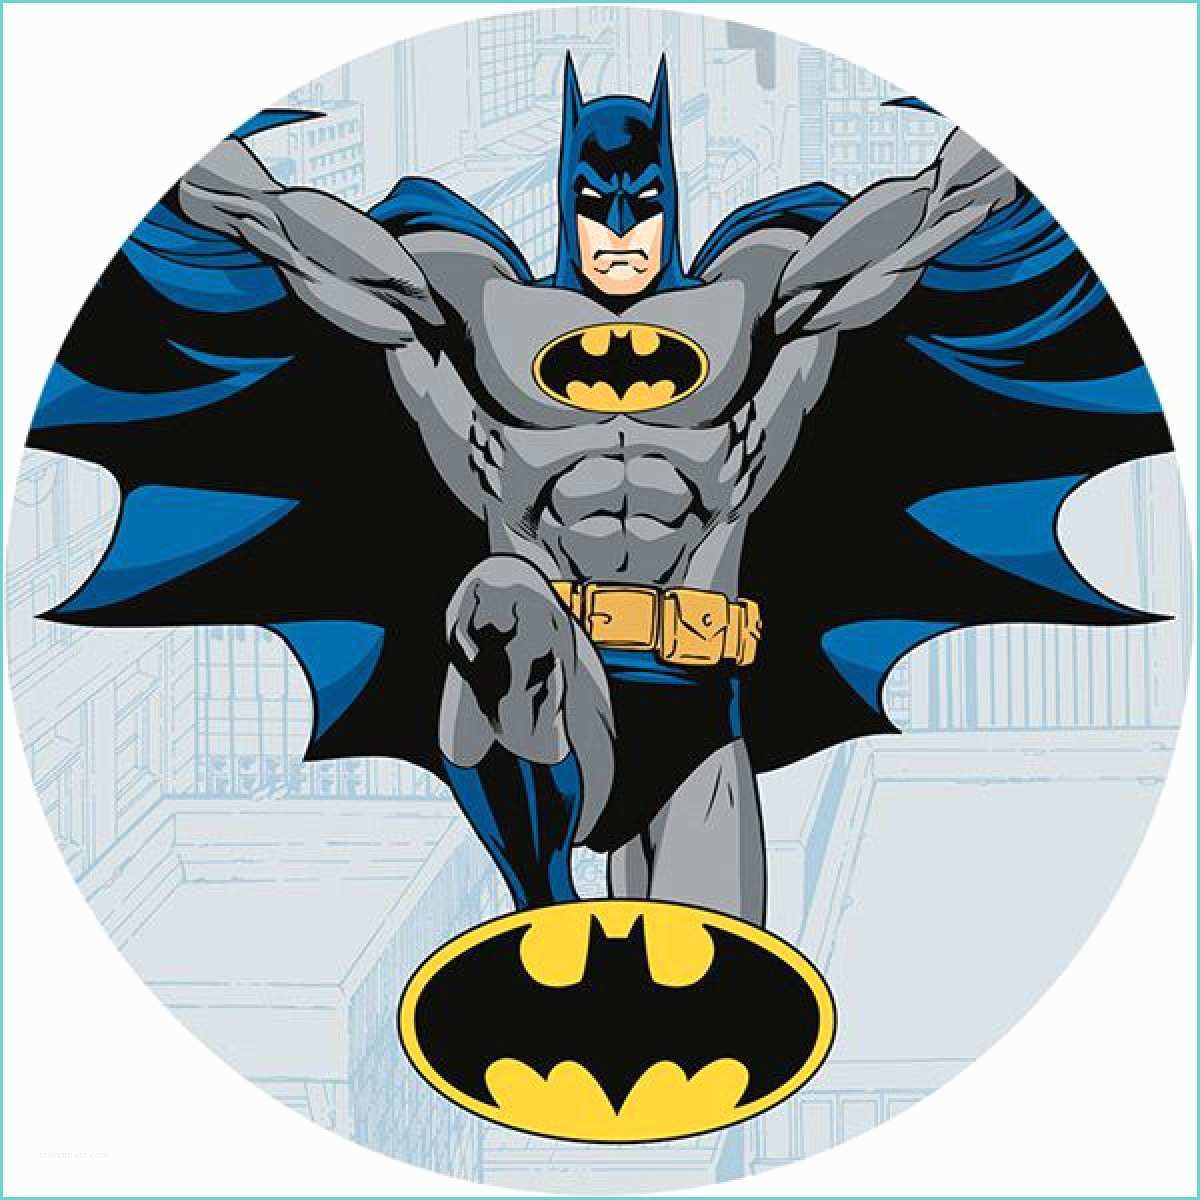 Immagini Di Batman Da Colorare Cialda Per torta Batman